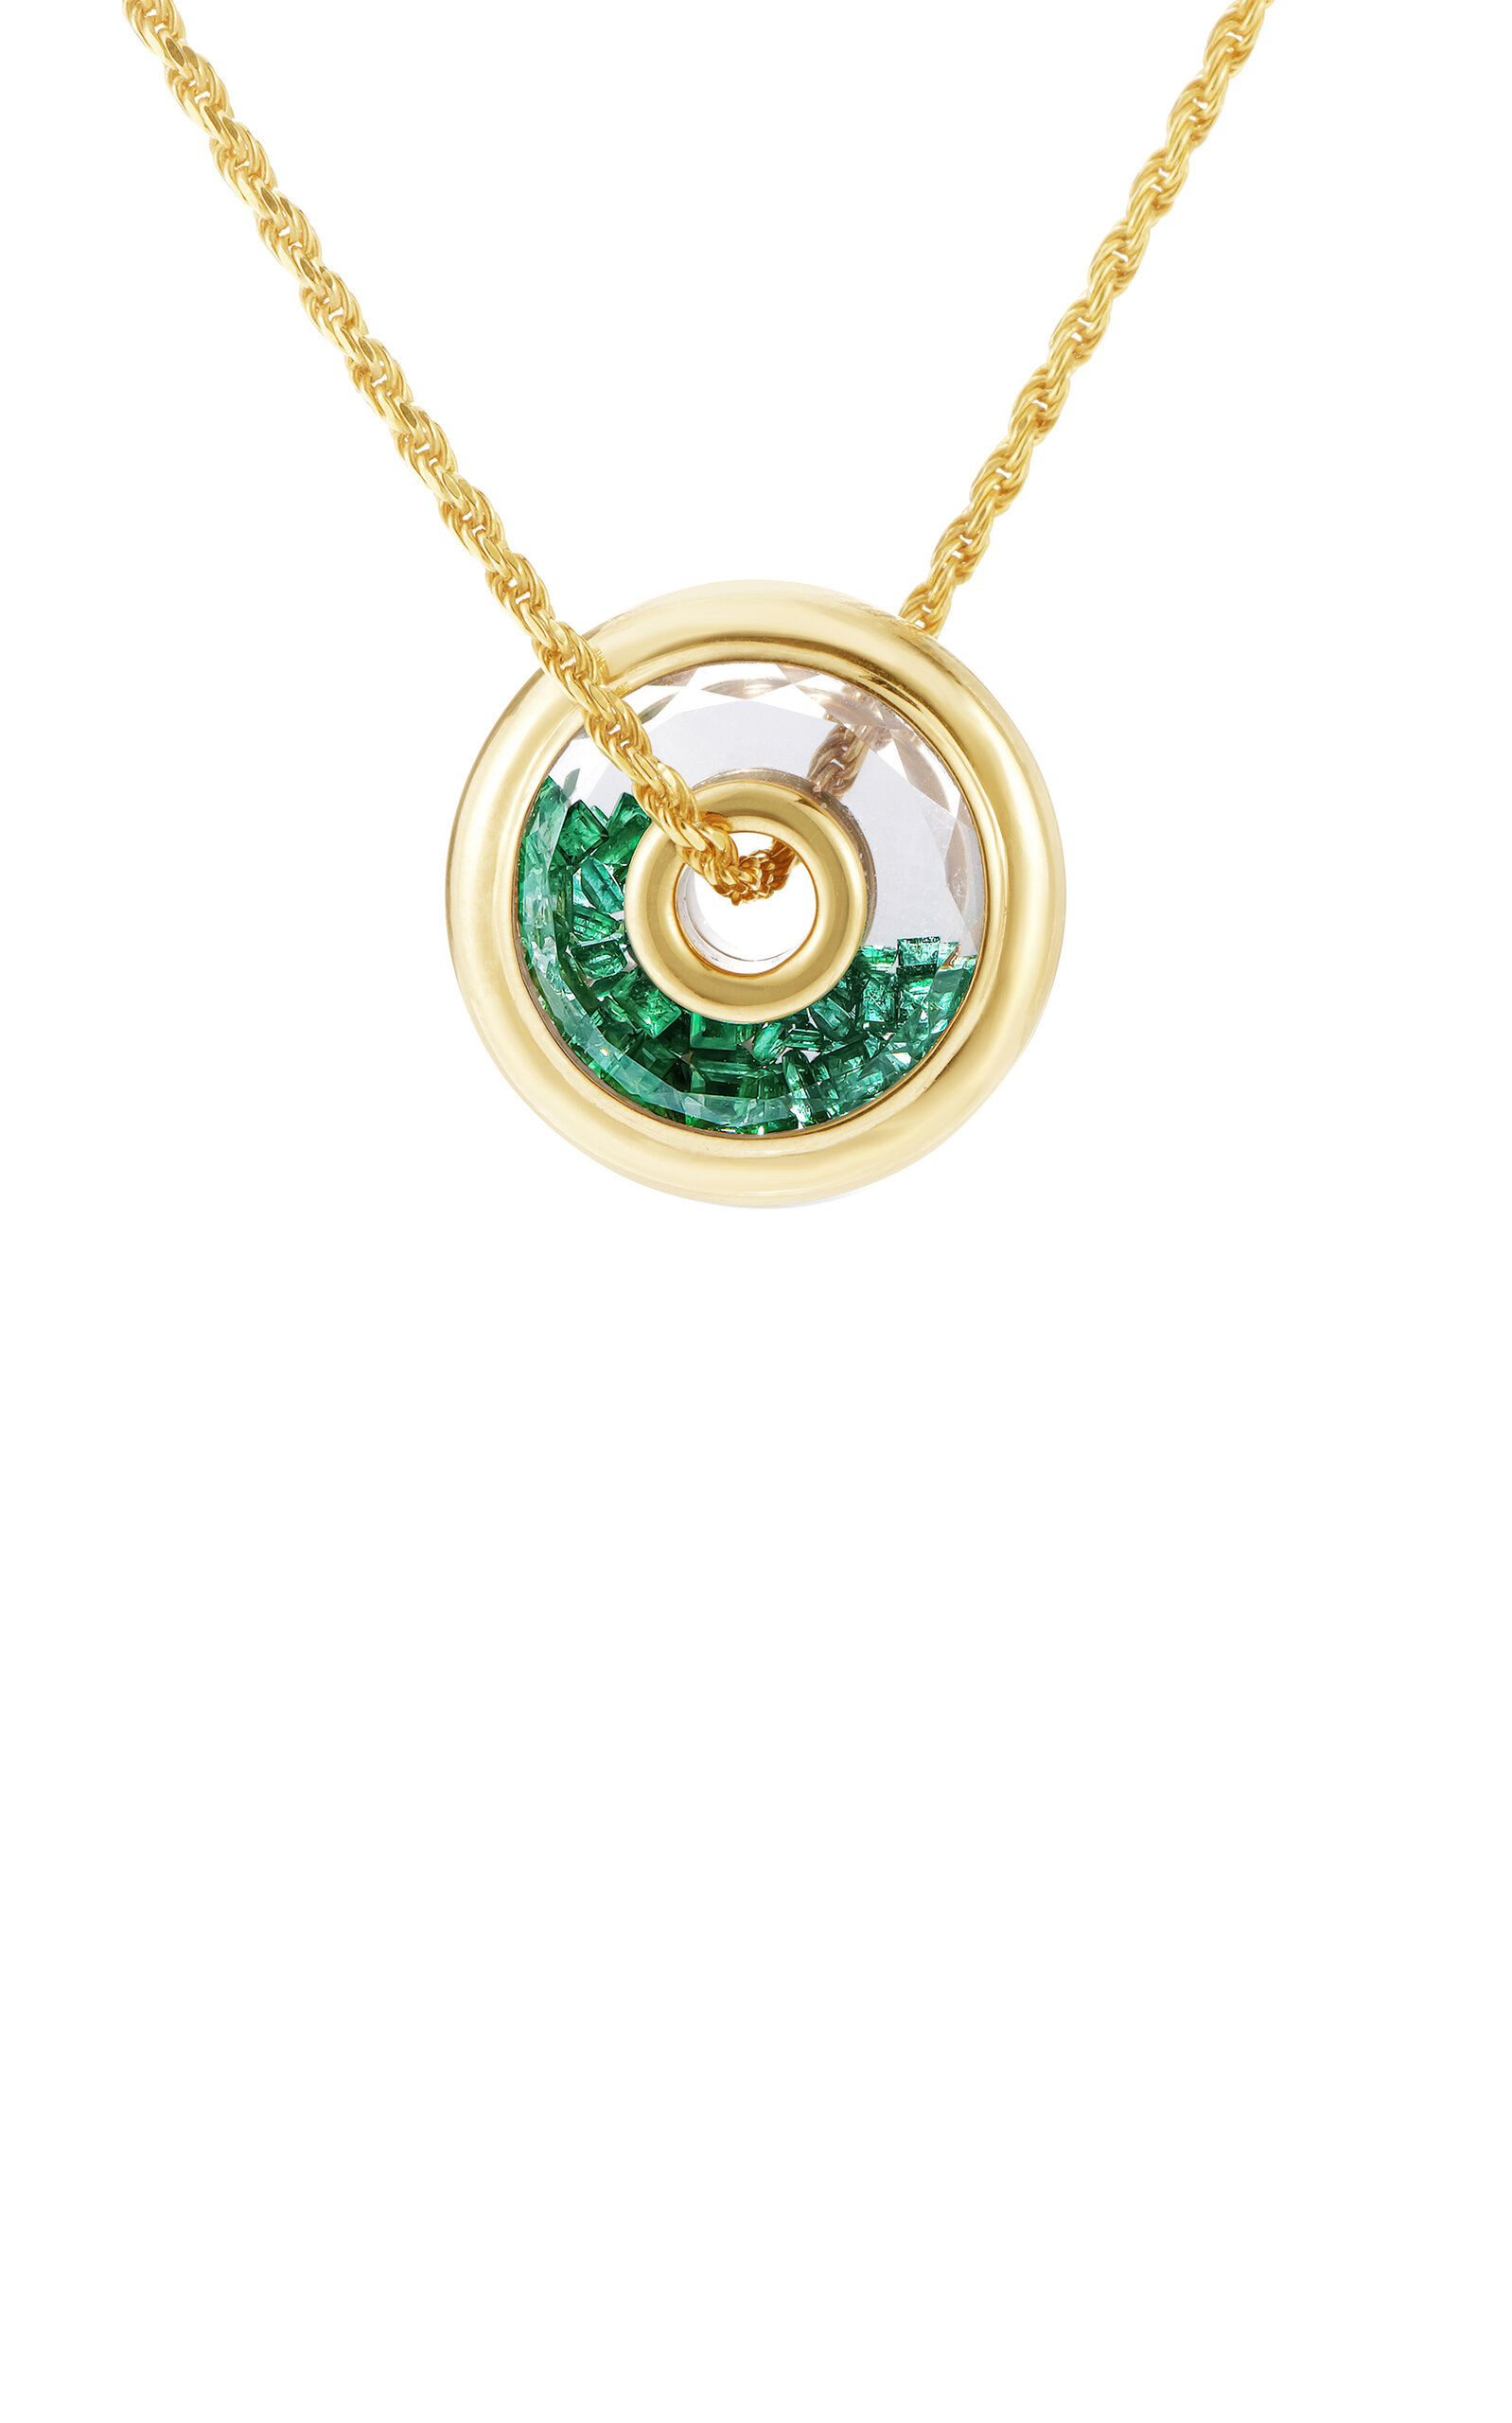 Moritz Glik 18k Yellow Gold Roda 15 Pendant Necklace With Emeralds